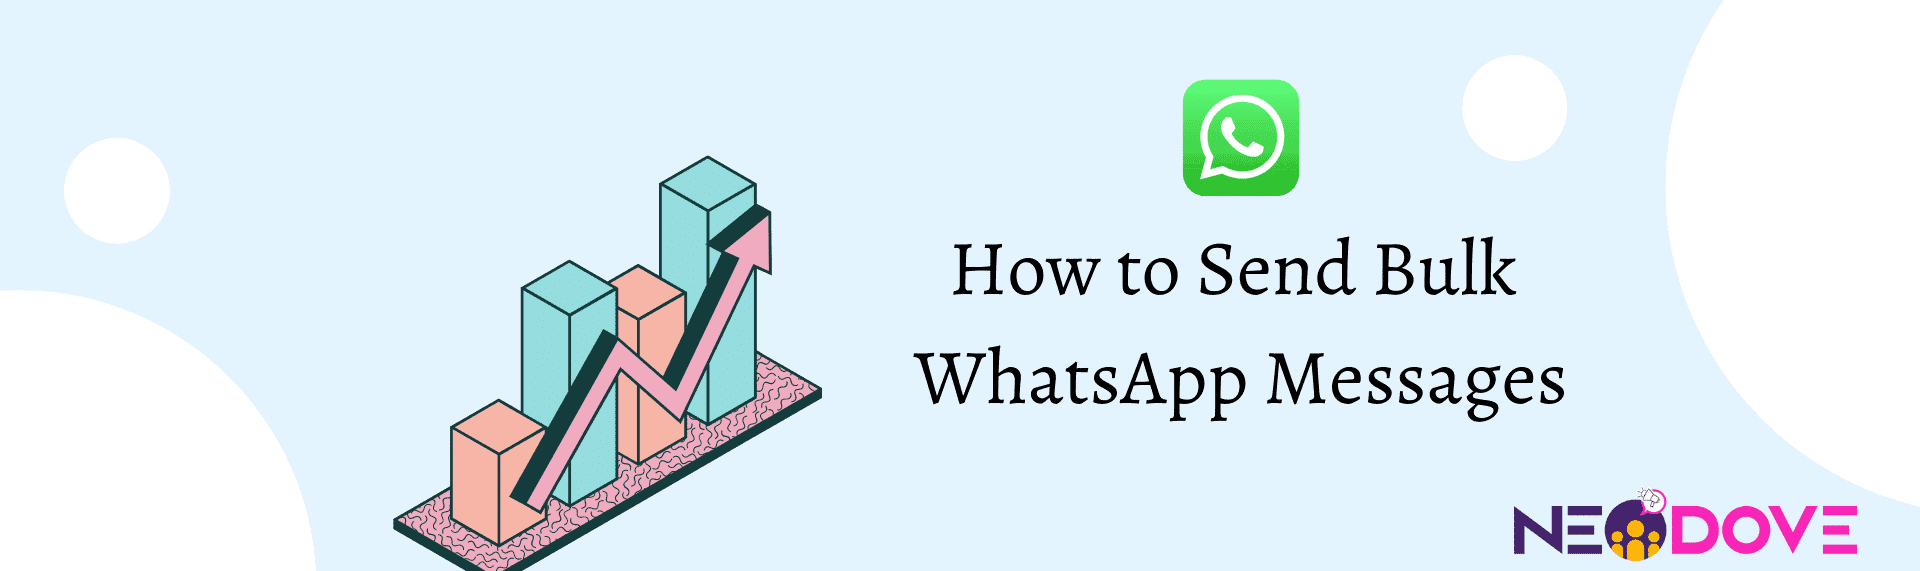 How to Send Bulk WhatsApp Messages